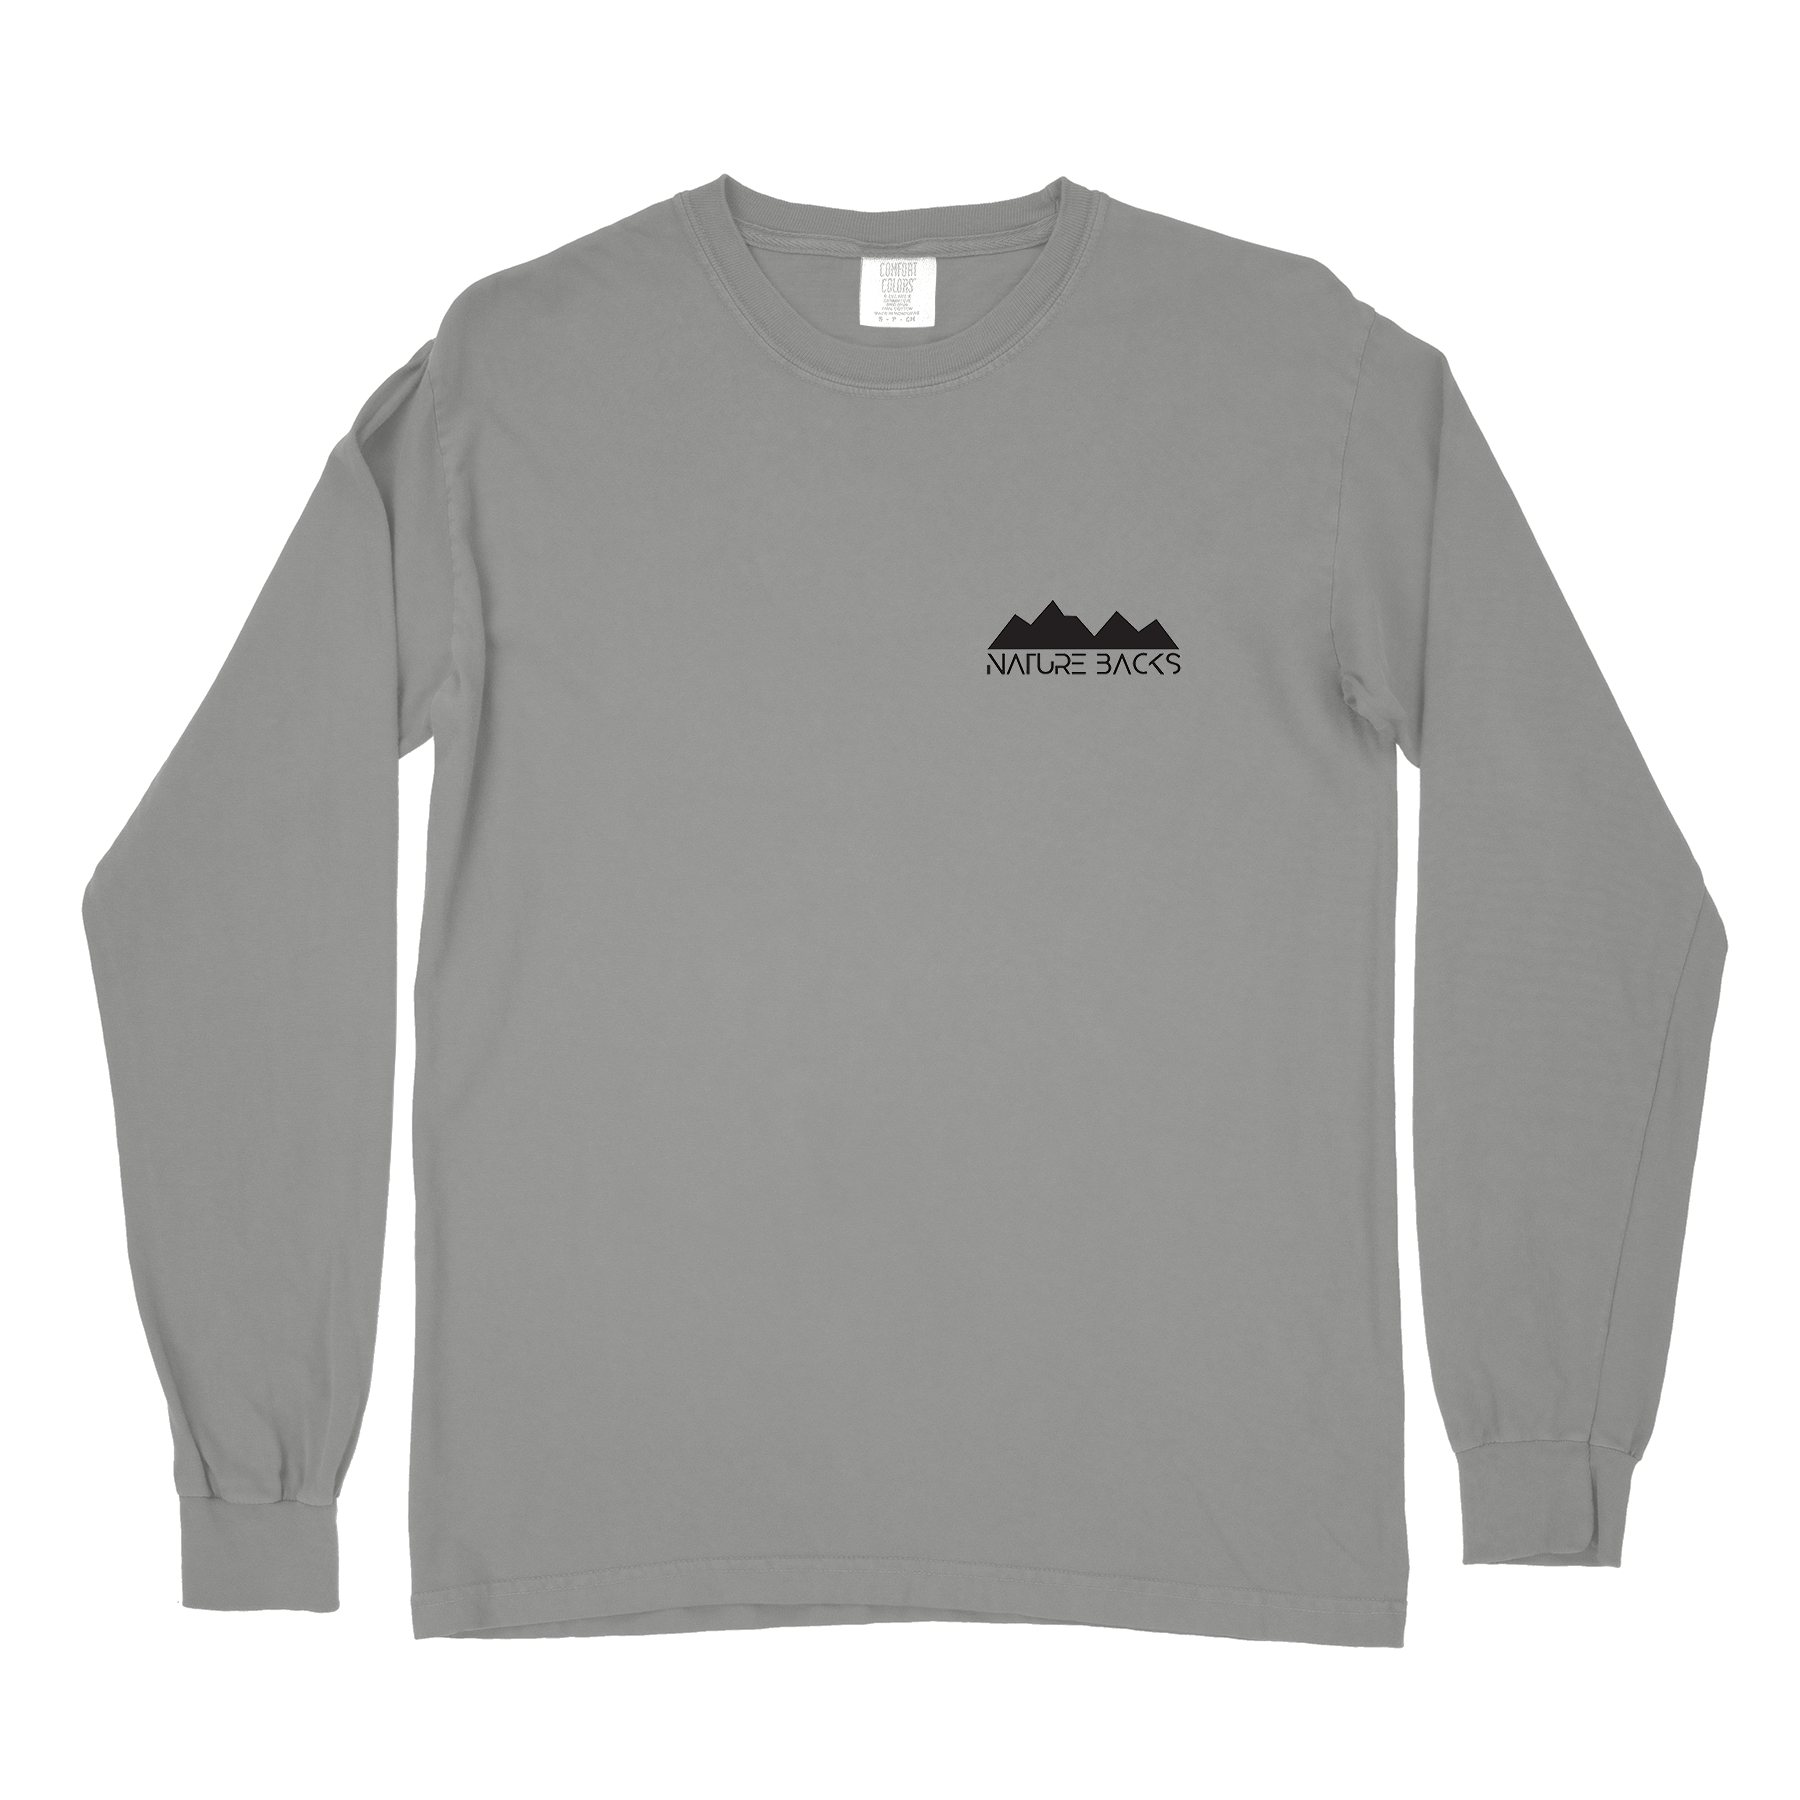 Nature Backs Comfort Colors Stellar Gray Long Sleeve T-Shirt | Nature-Inspired Design on Ultra-Soft Fabric